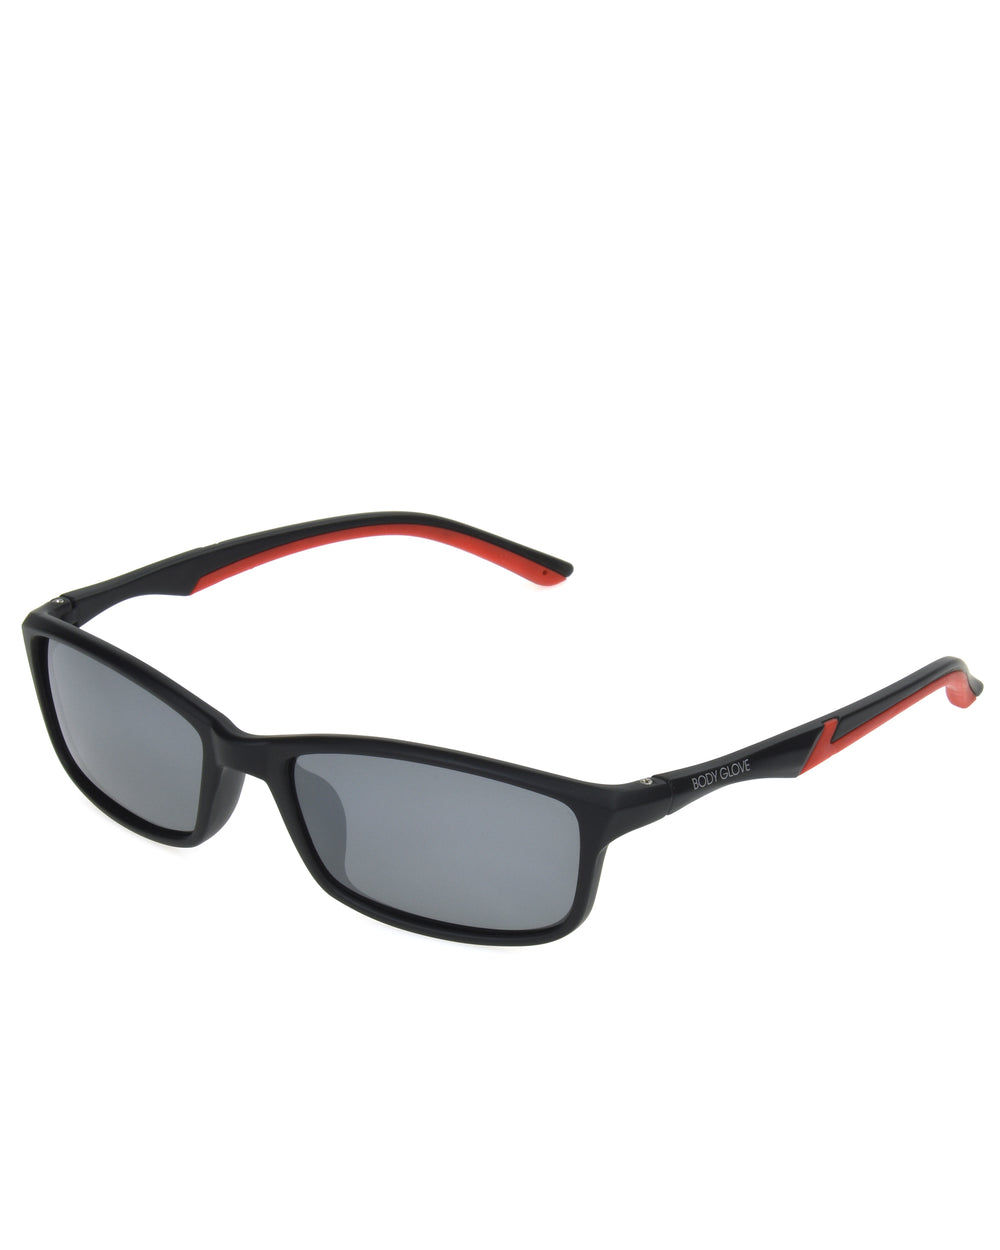 Men's BGM1913 Polarized Sunglasses - Black